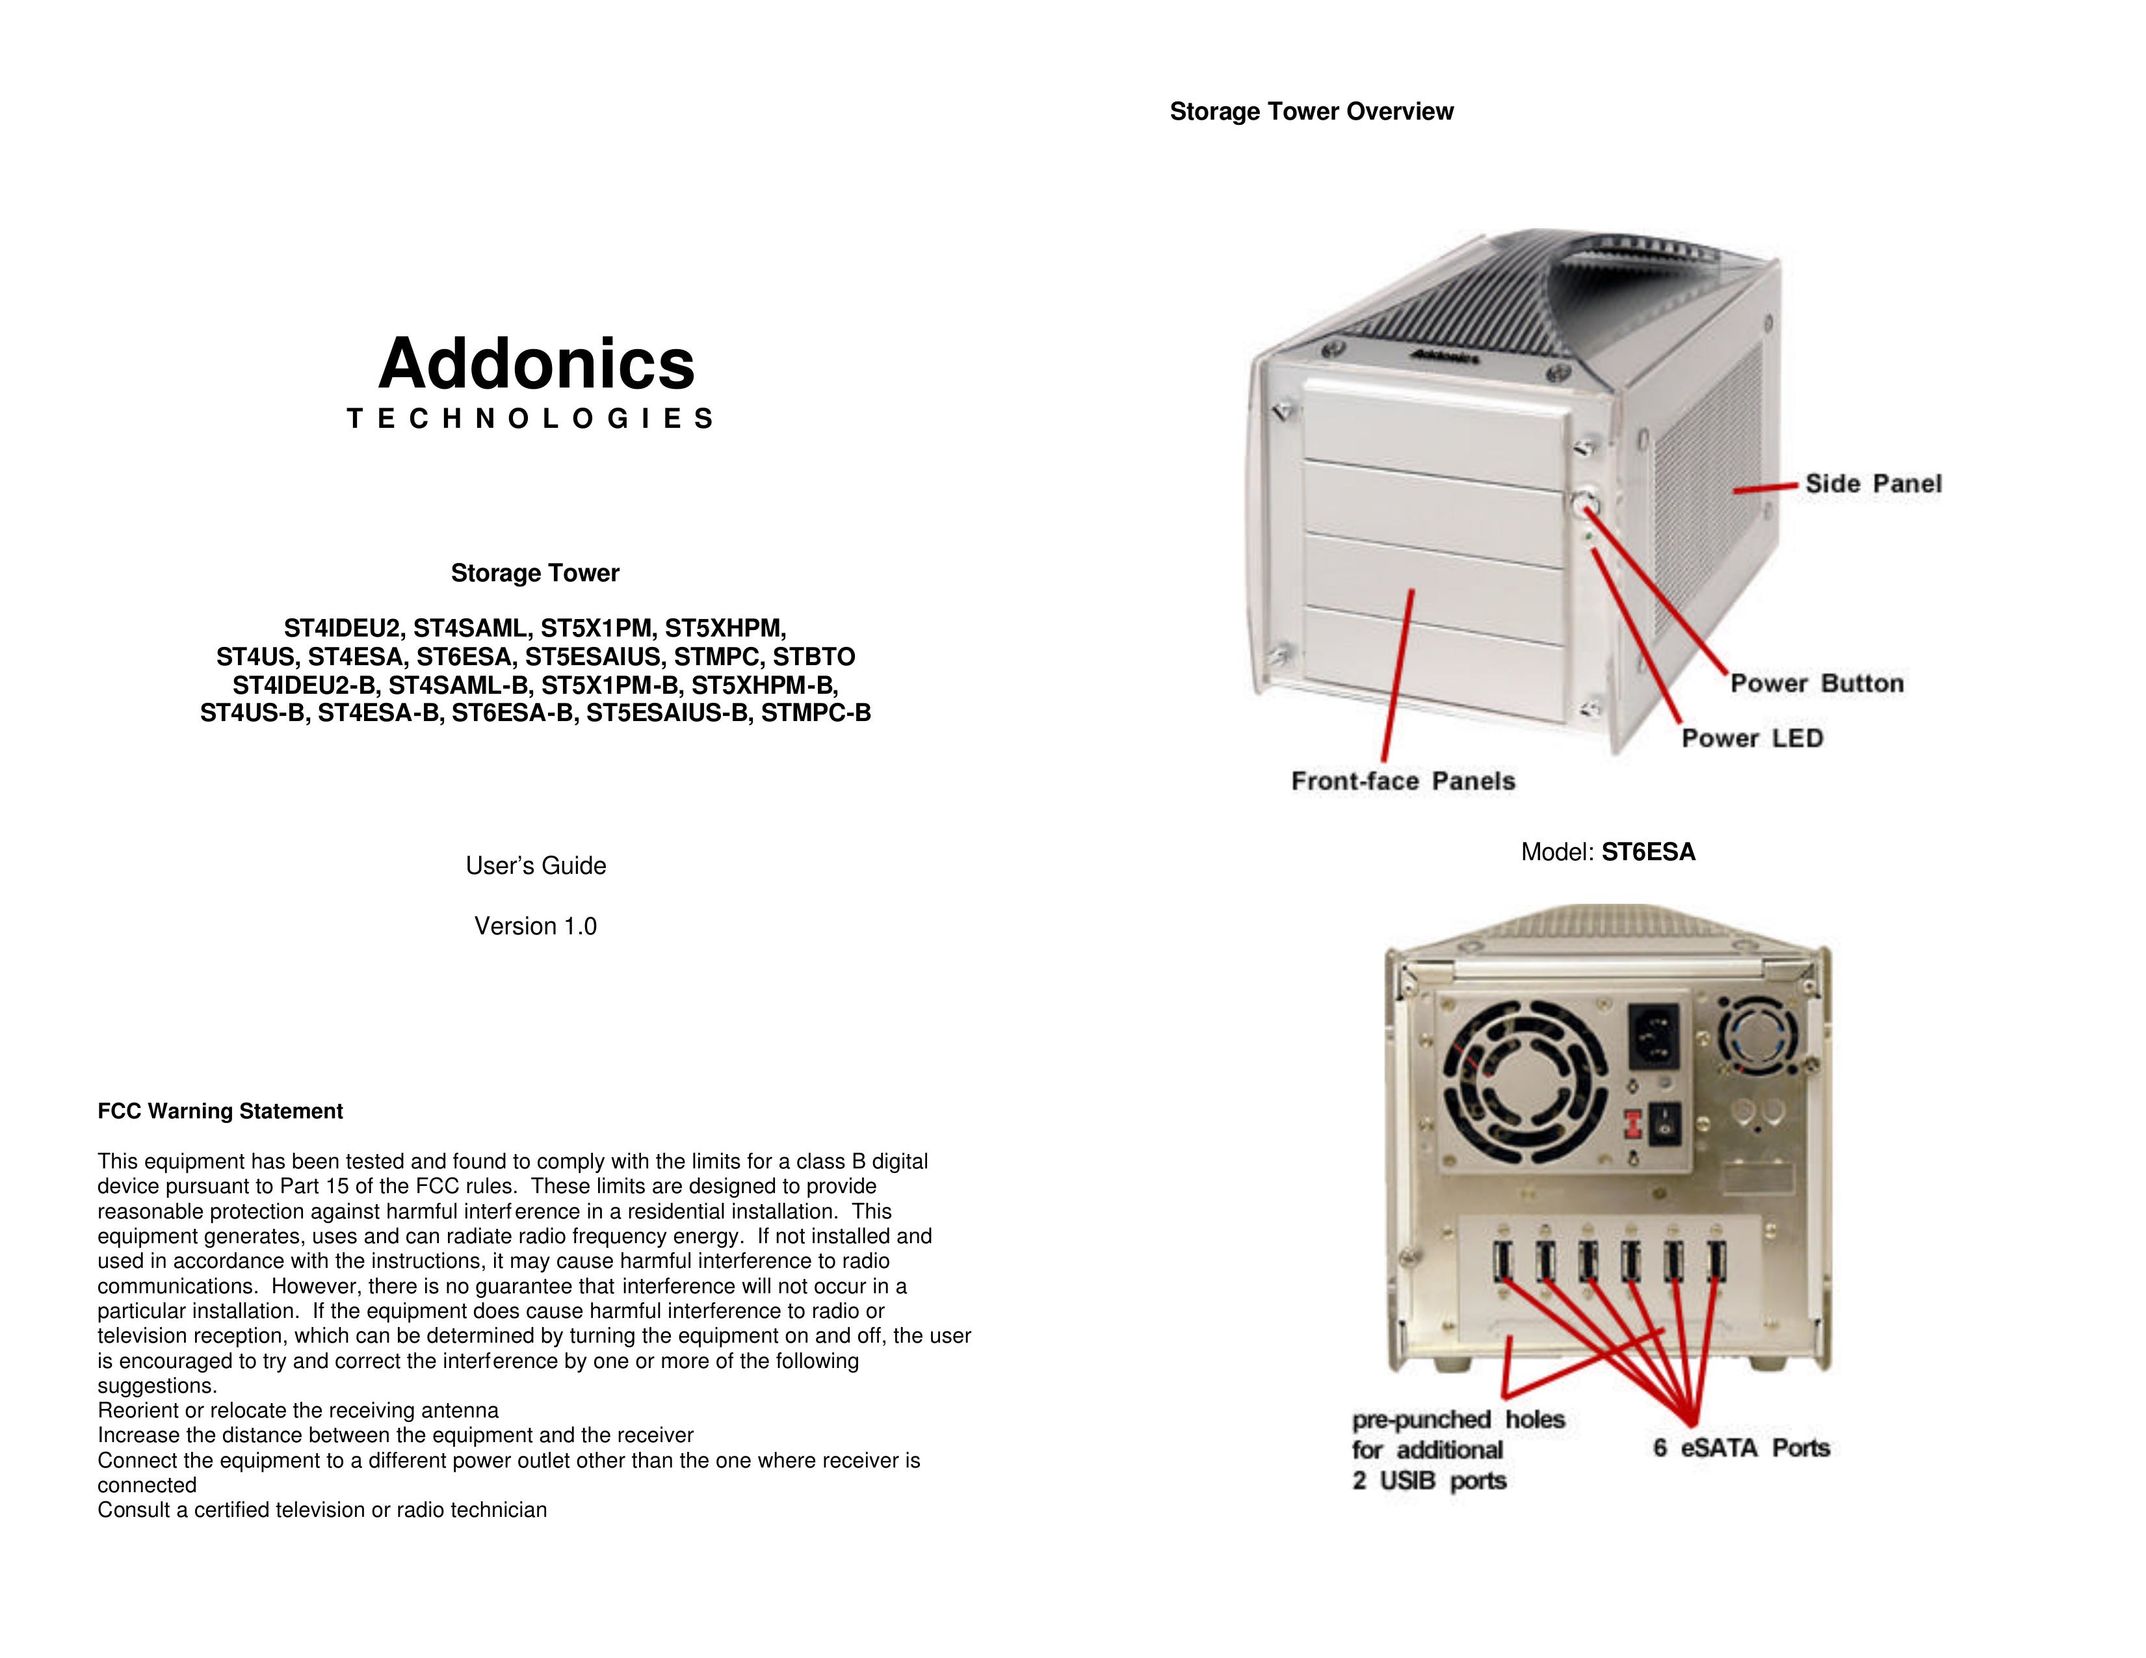 Addonics Technologies ST5ESAIUS Portable Media Storage User Manual